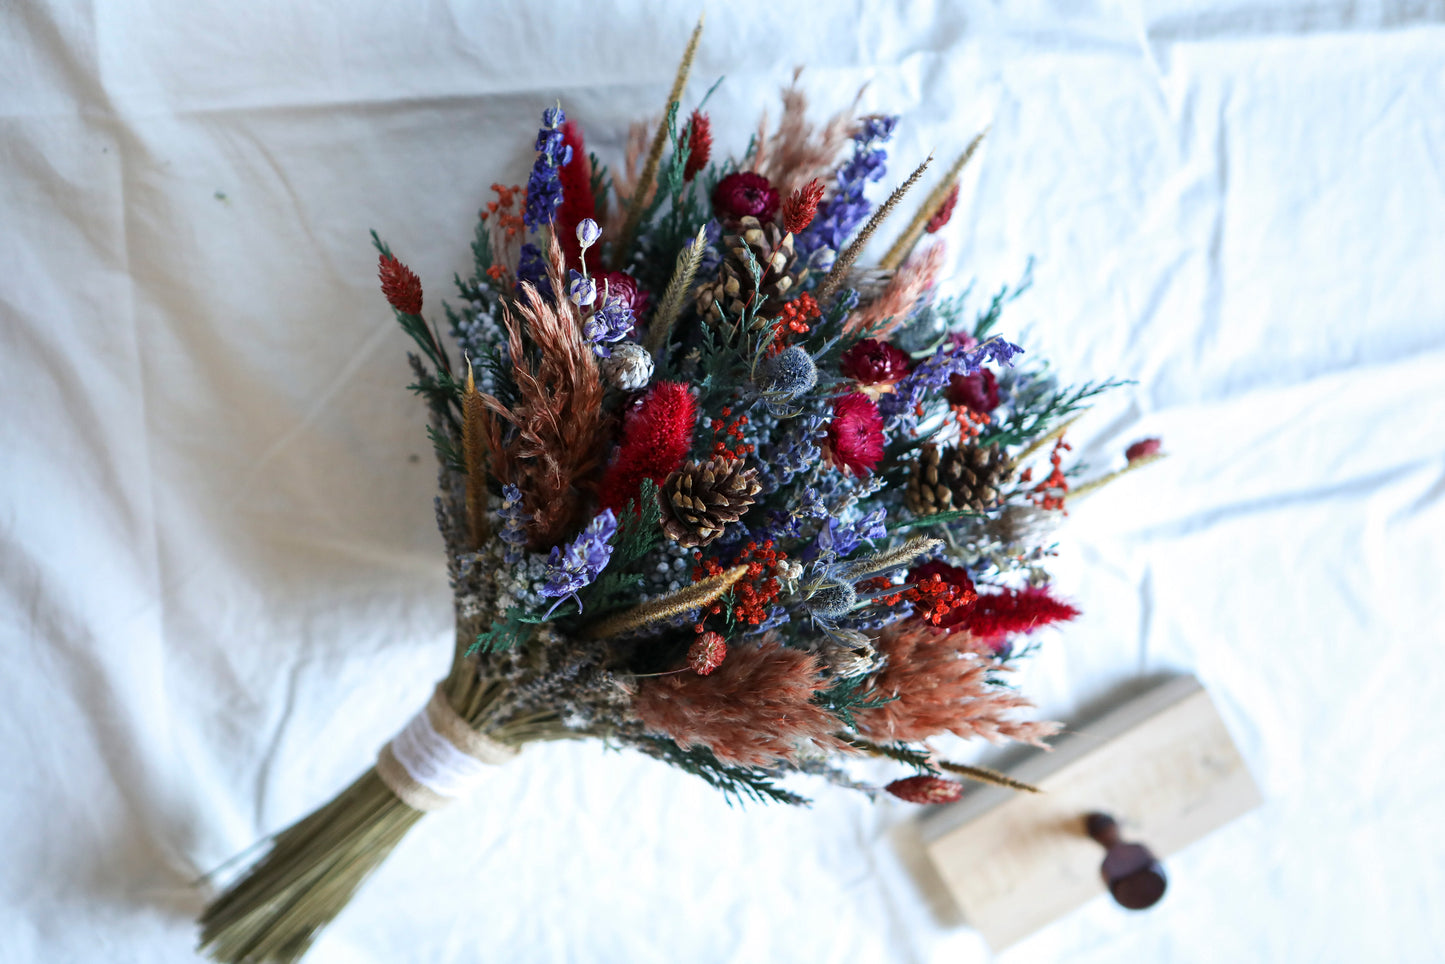 Jewel Burgundy Winter Bouquet